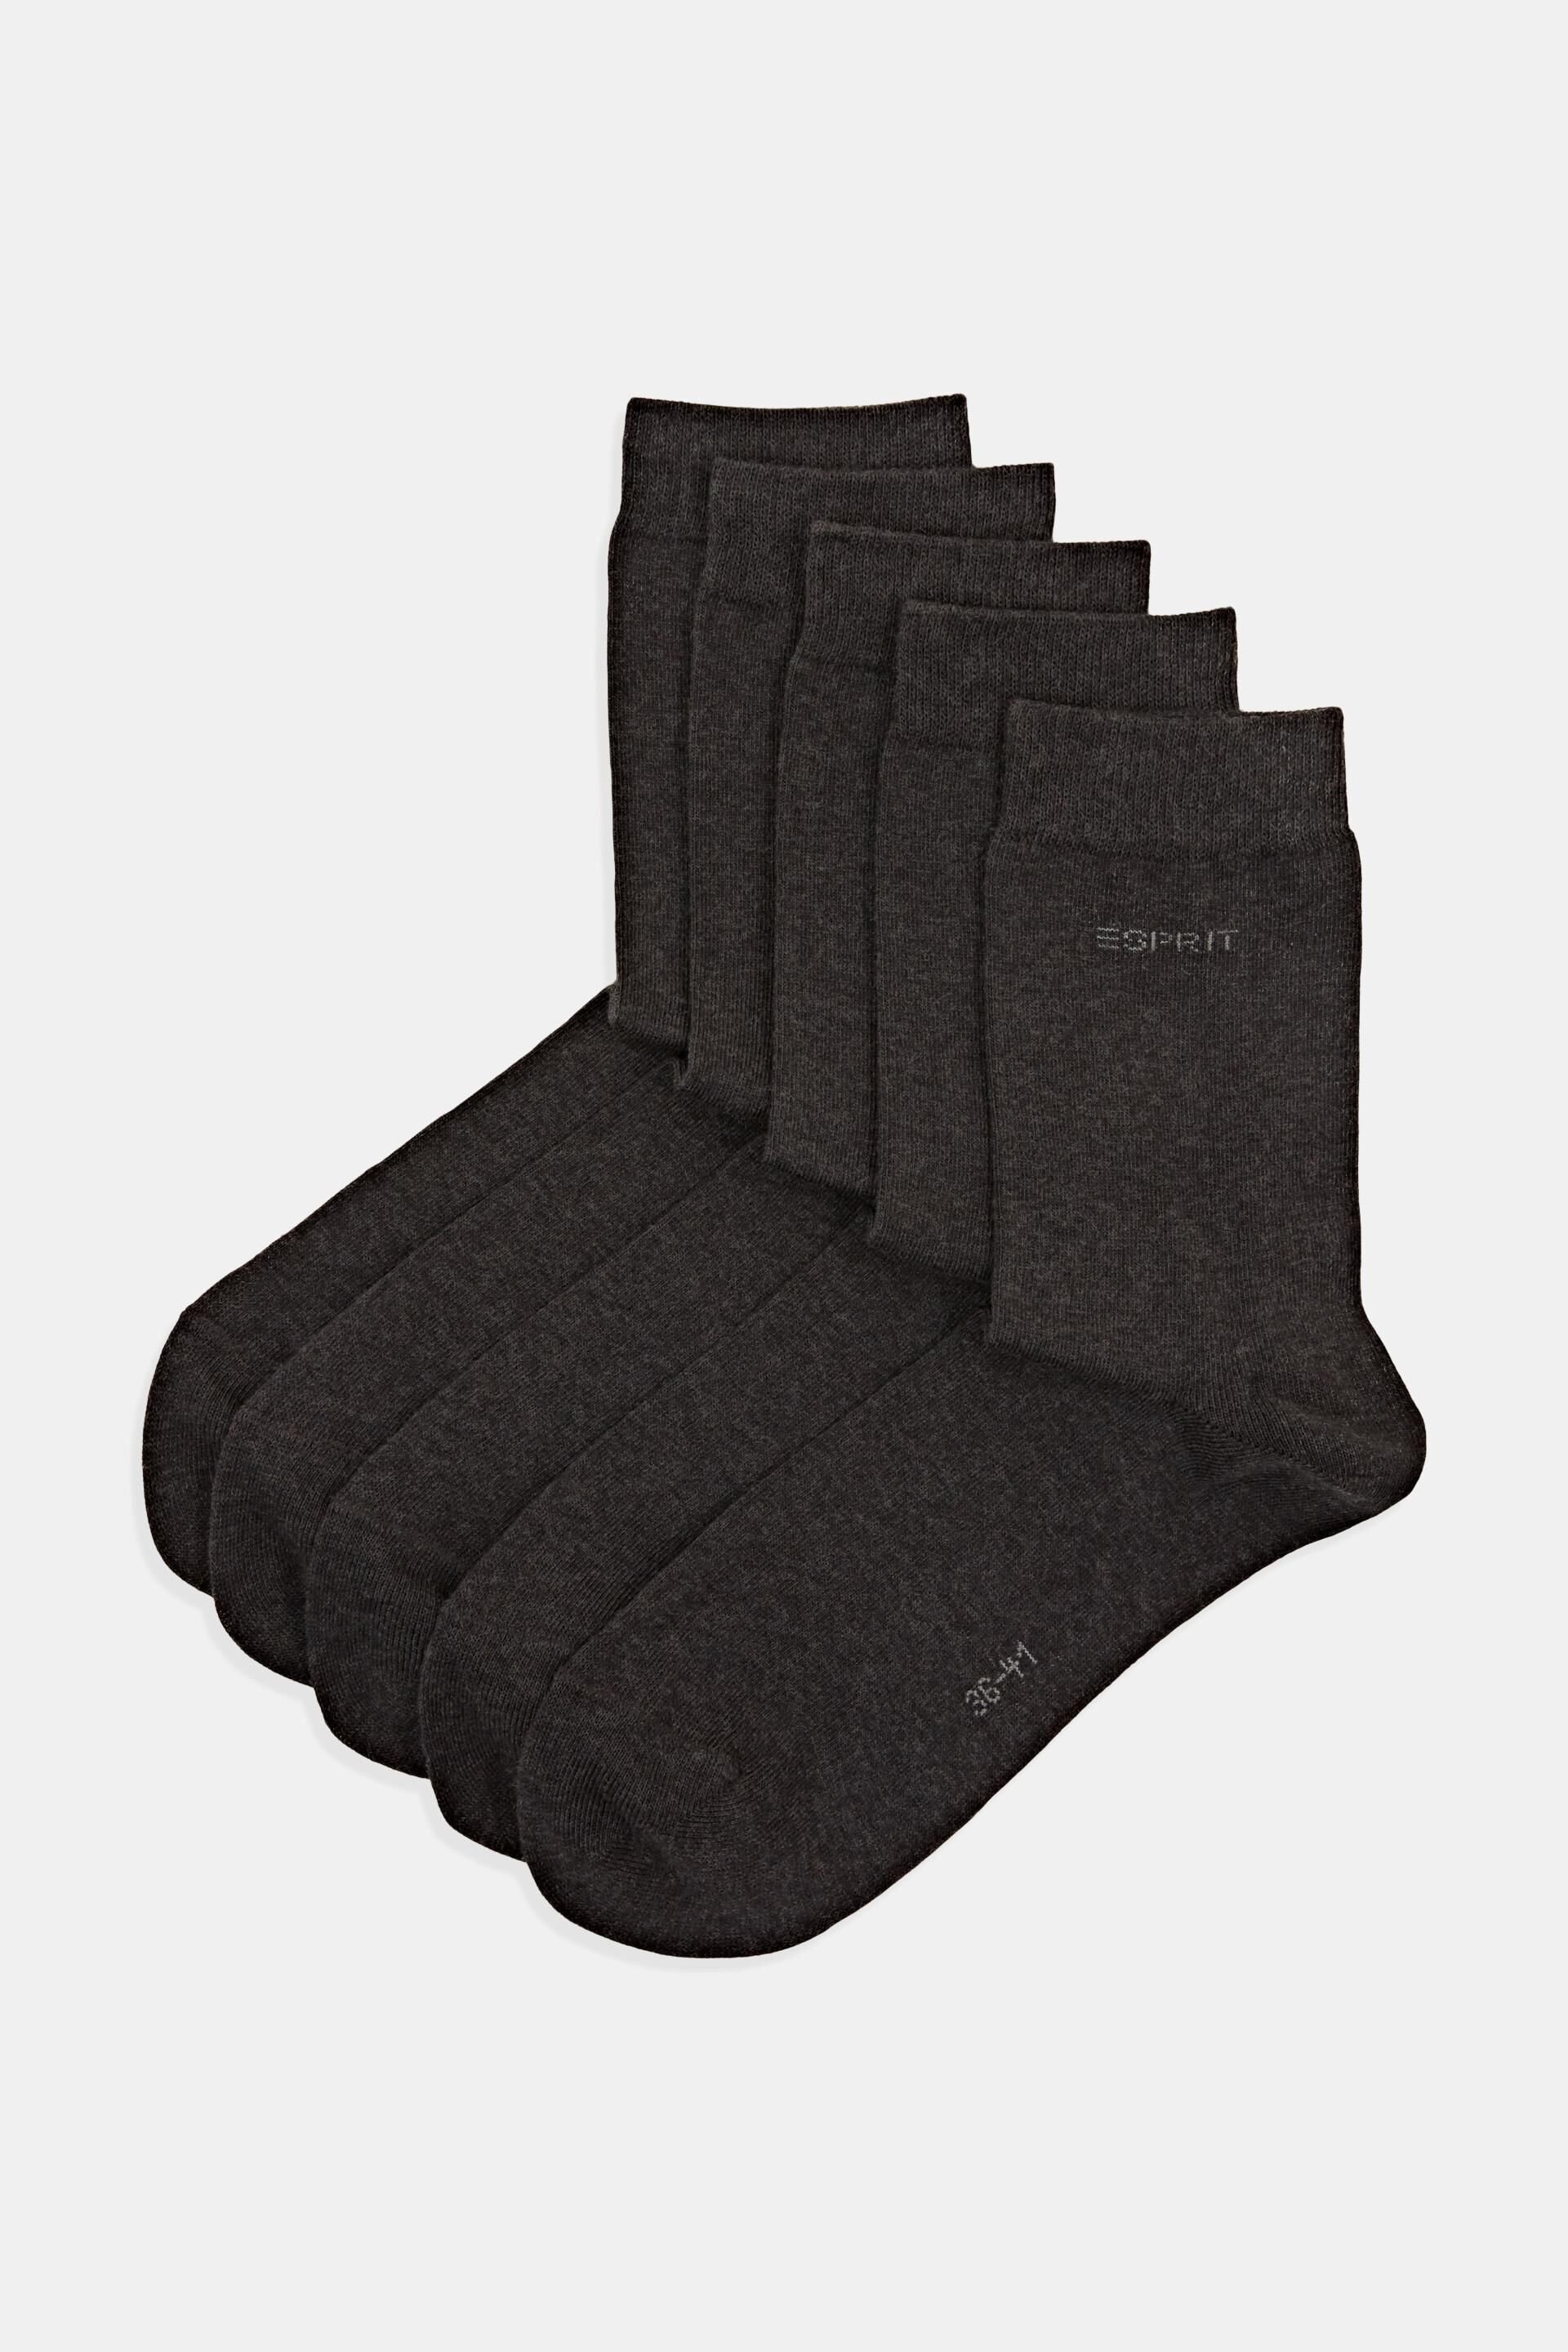 Esprit 5 organic Pack of socks, plain cotton